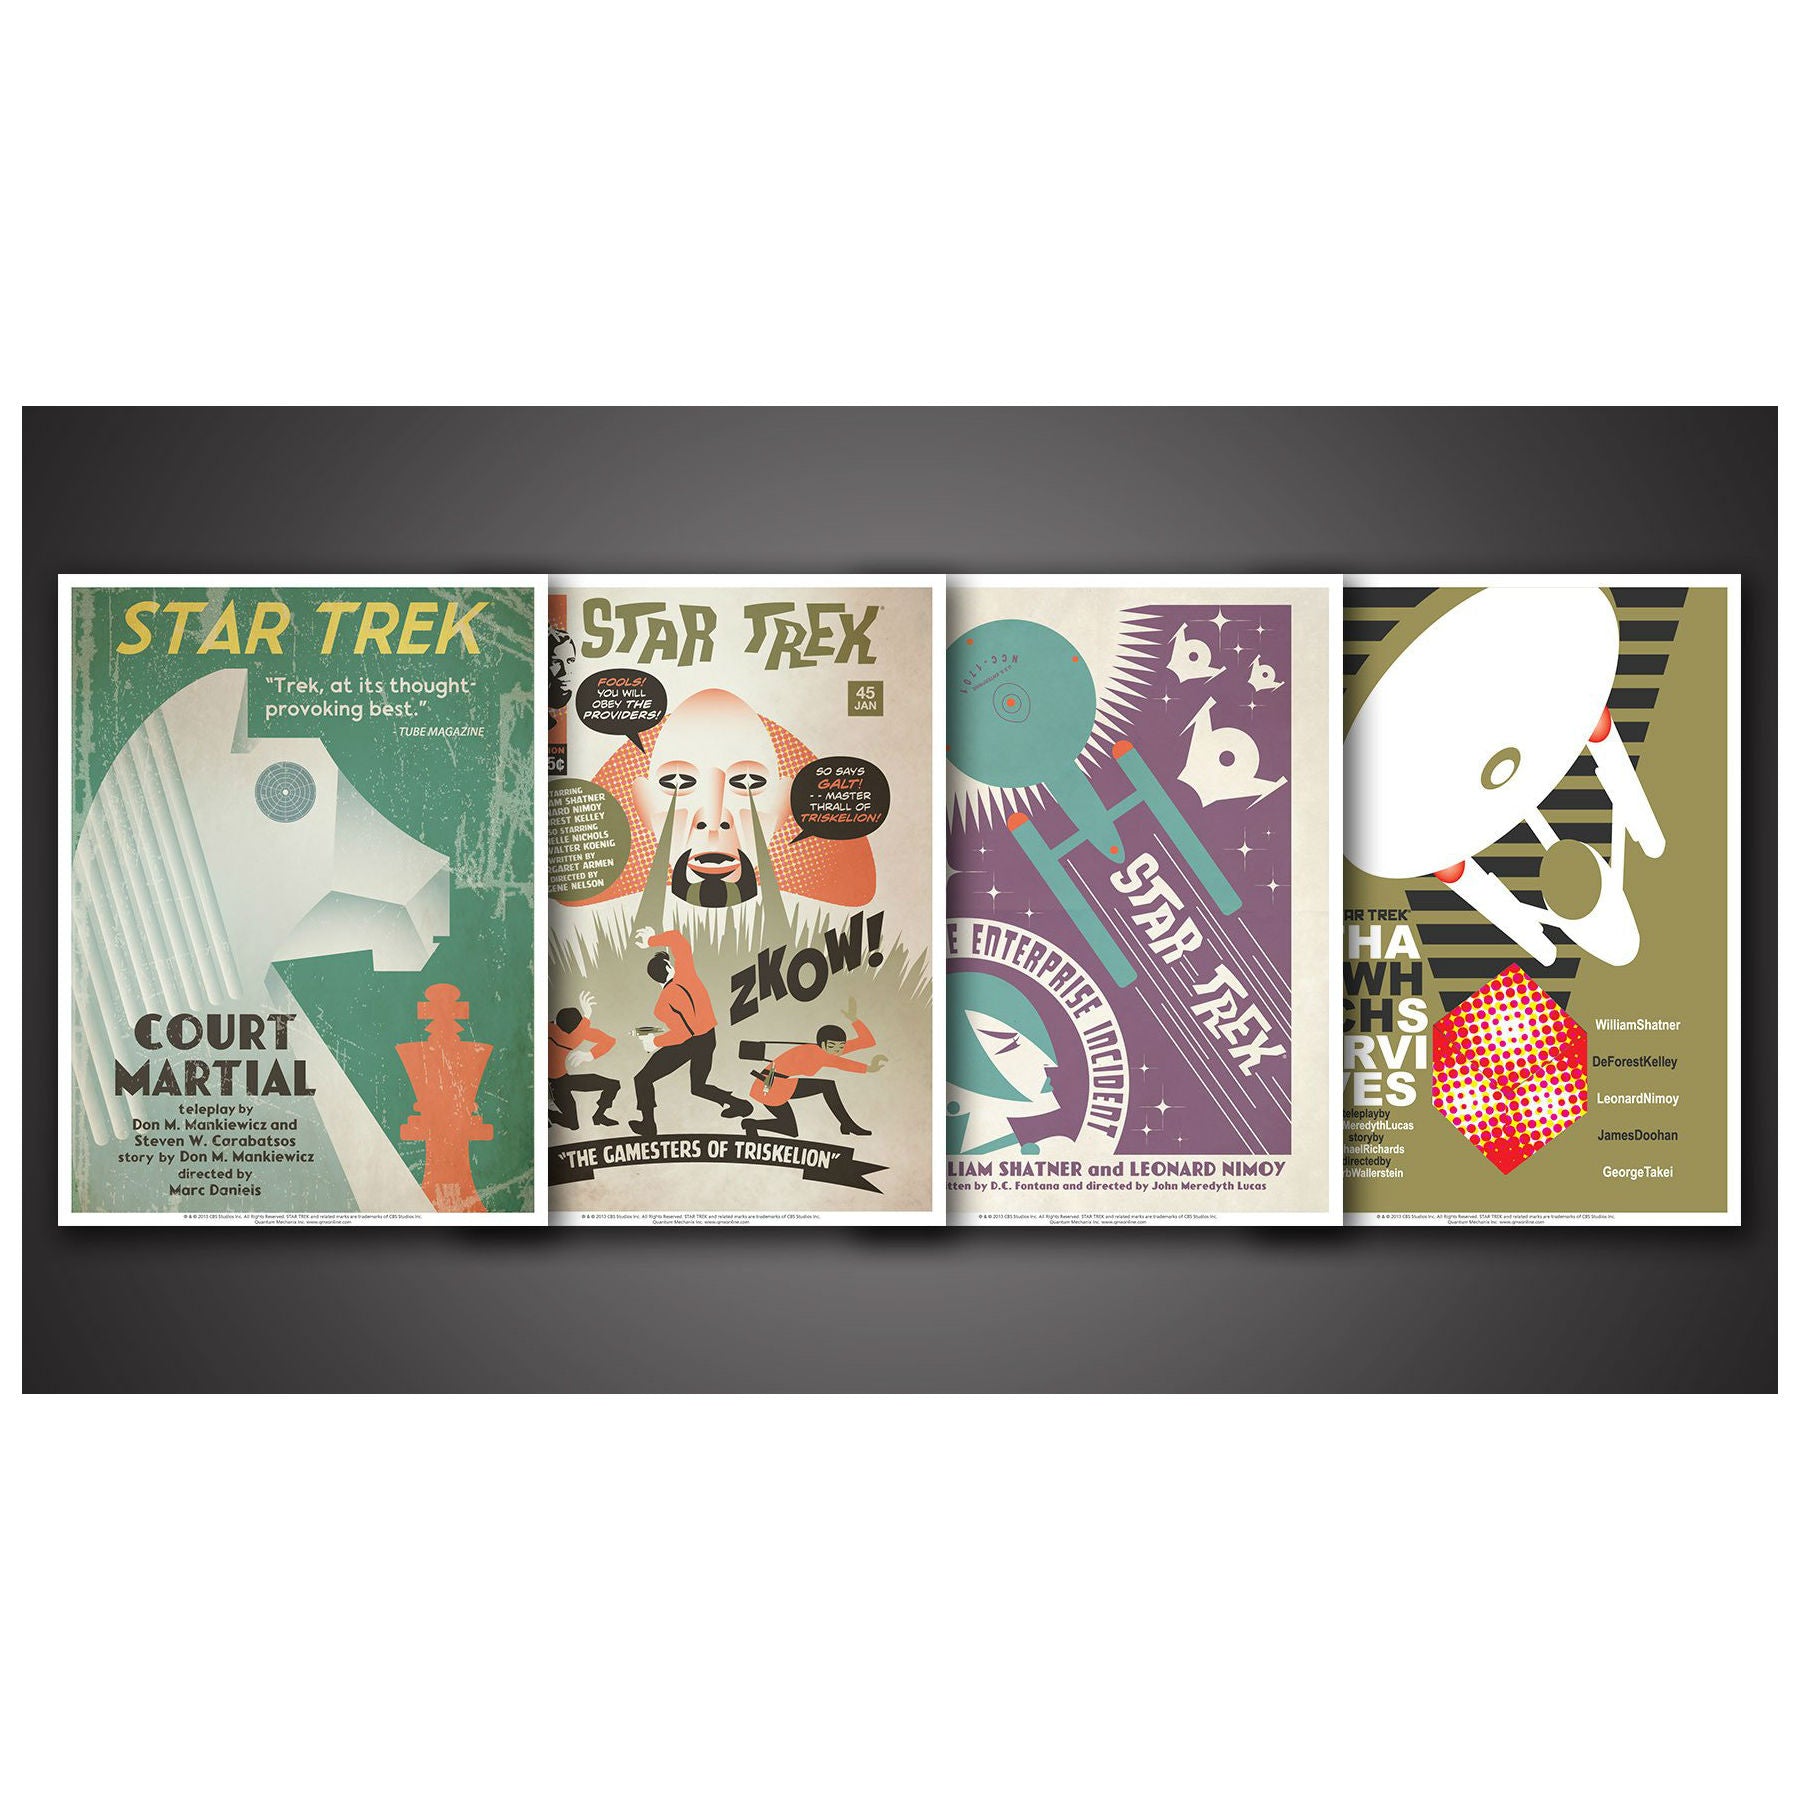 QMx Star Trek: The Original Series Art Prints - Set 14 Set of 4 Posters Size: 18" x 24"